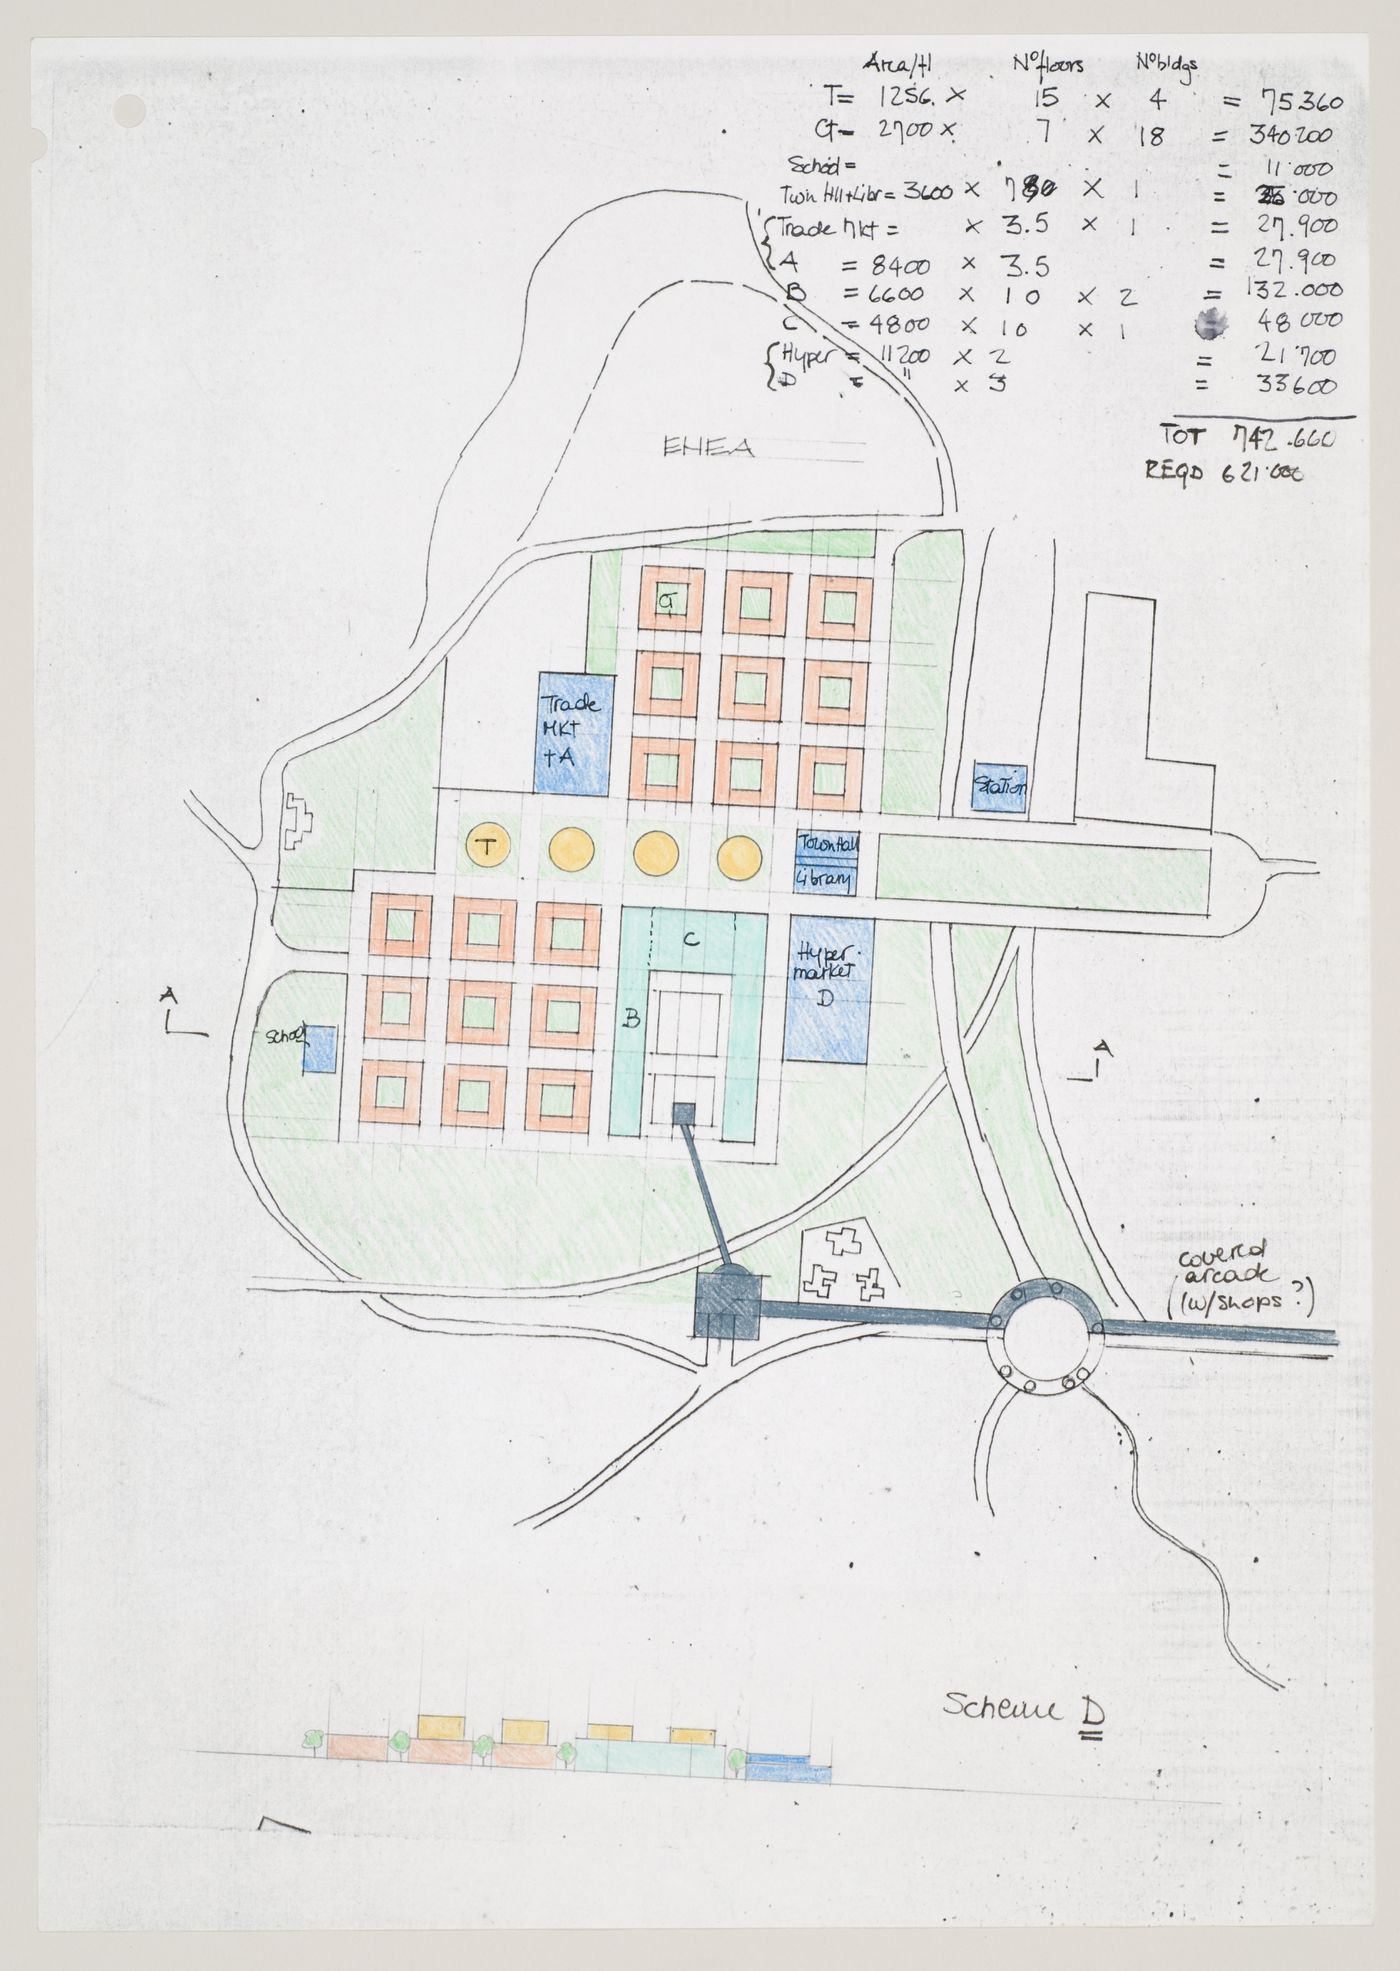 New Town Centre, Caselecchio di Reno, Italy: plan and elevation